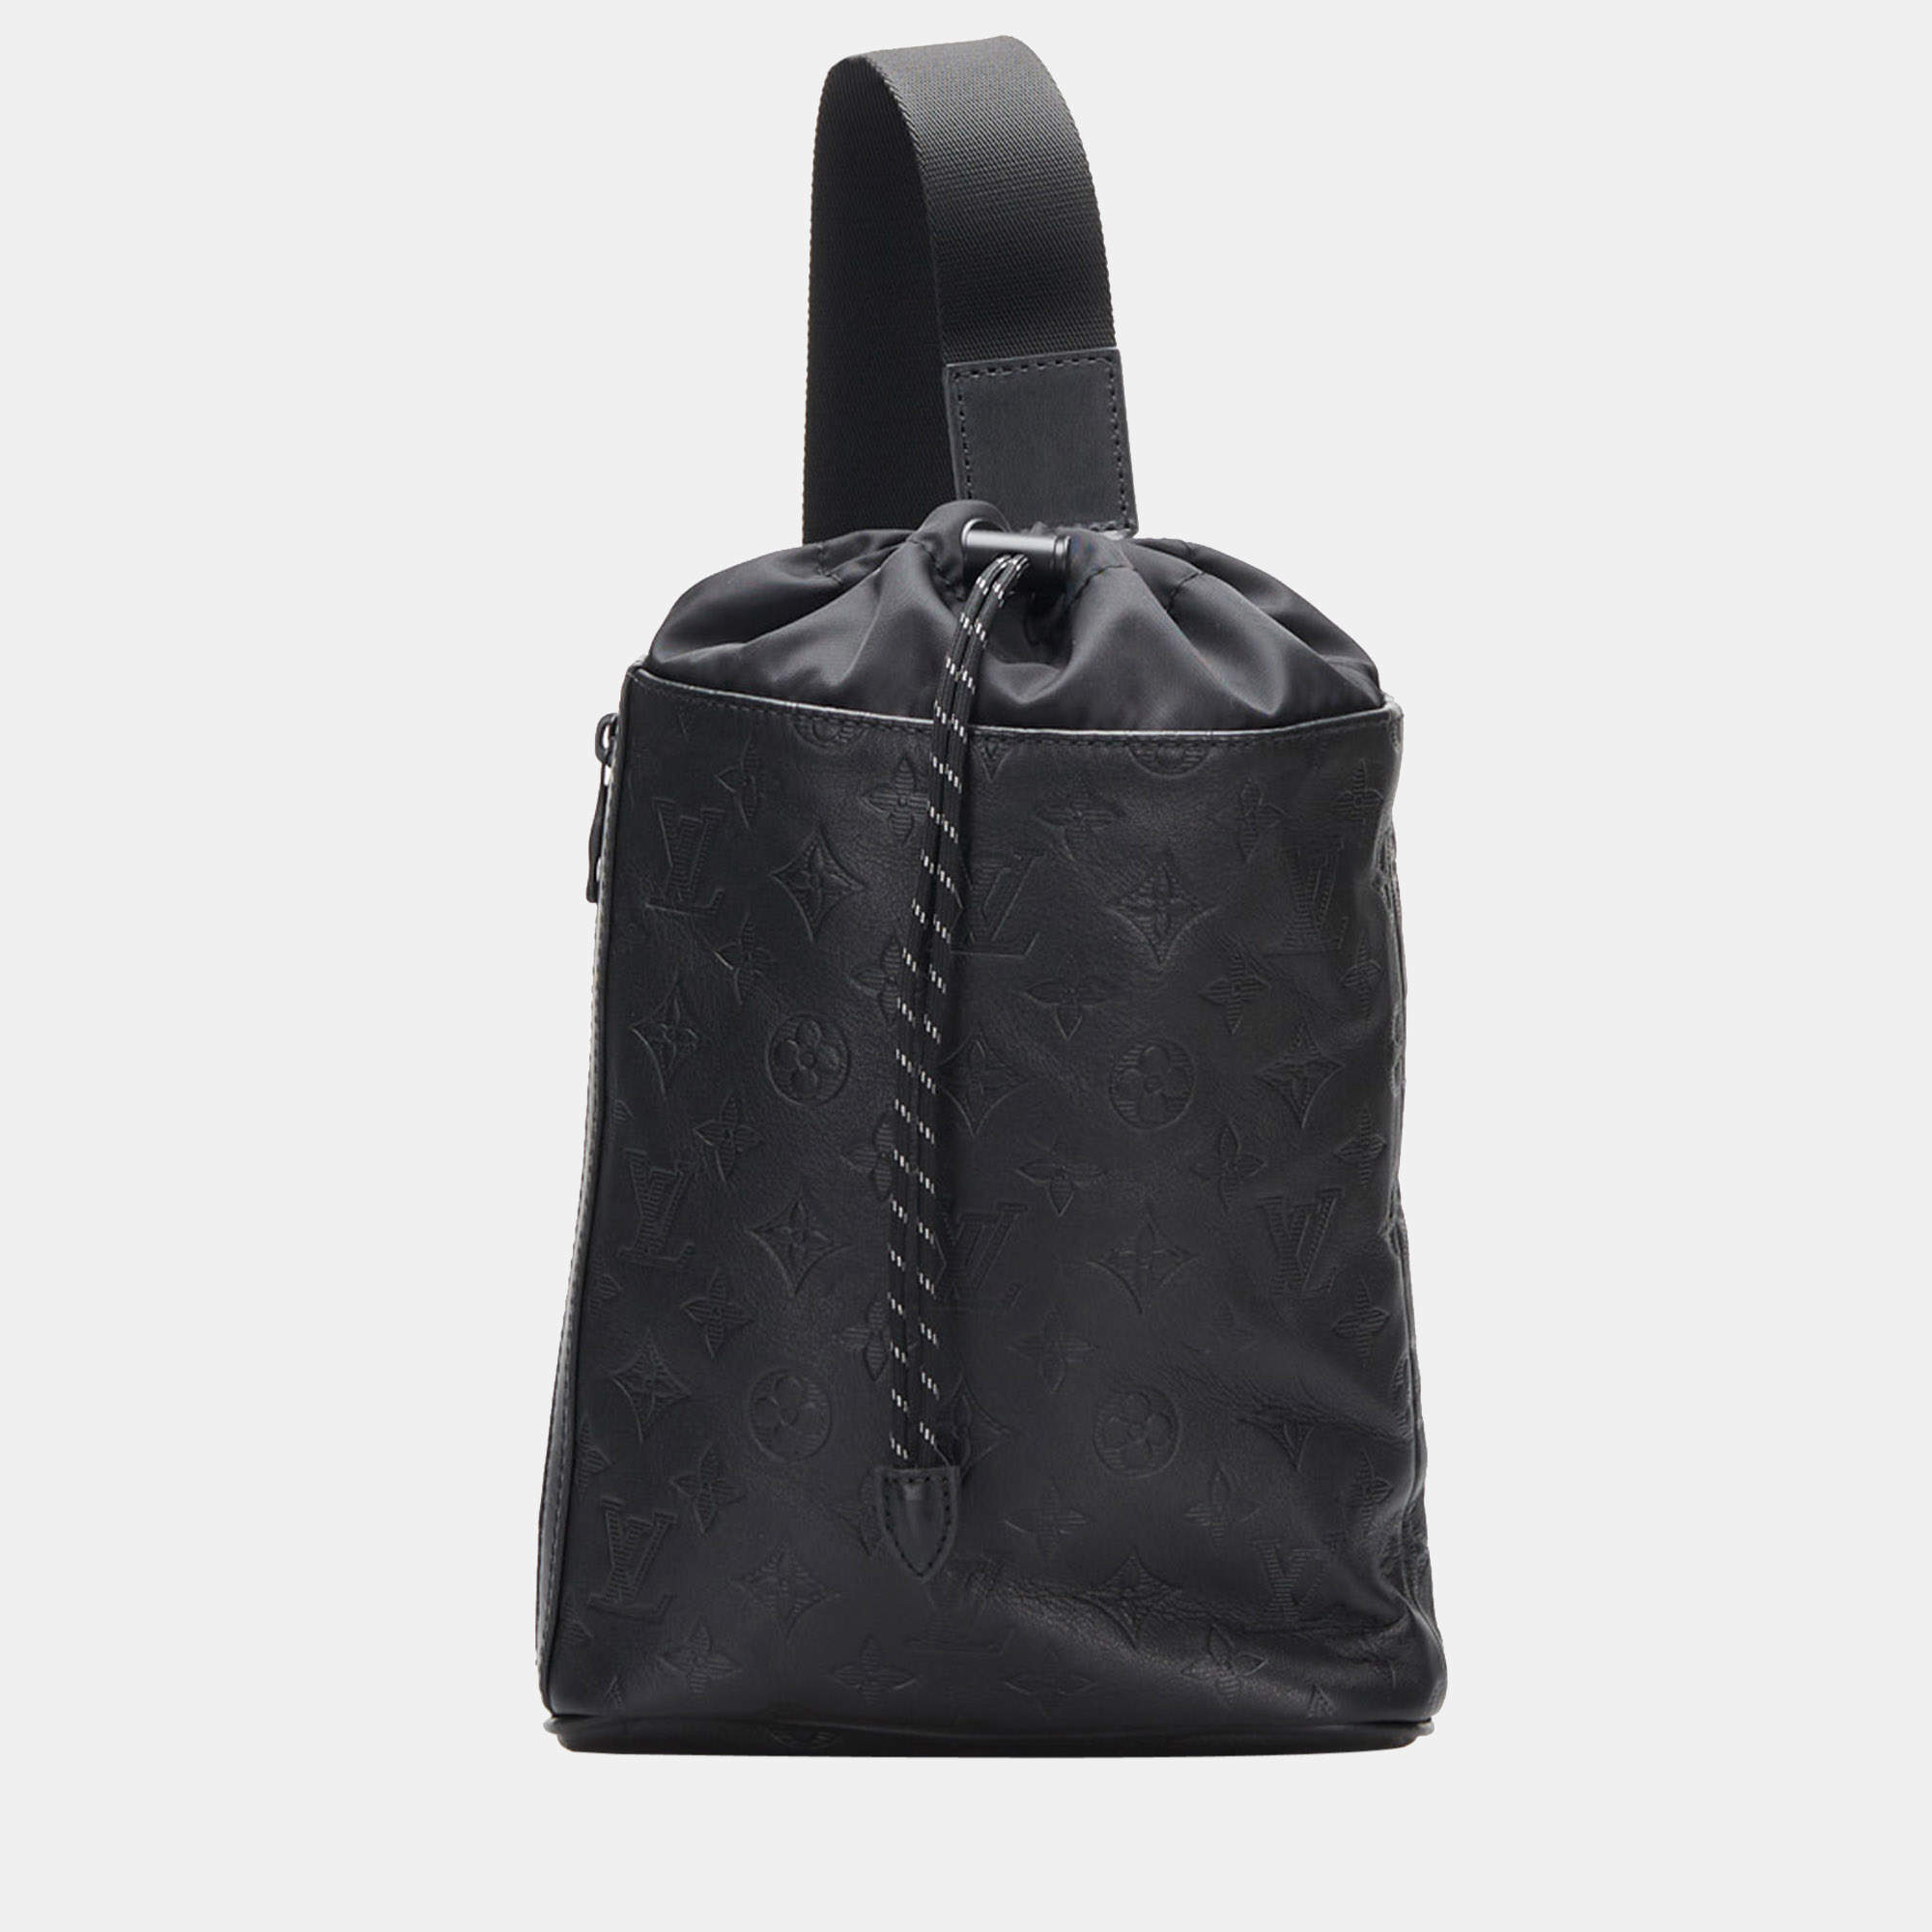 Buy Cheap Good quality Monogram Shadow New style Louis Vuitton Bag